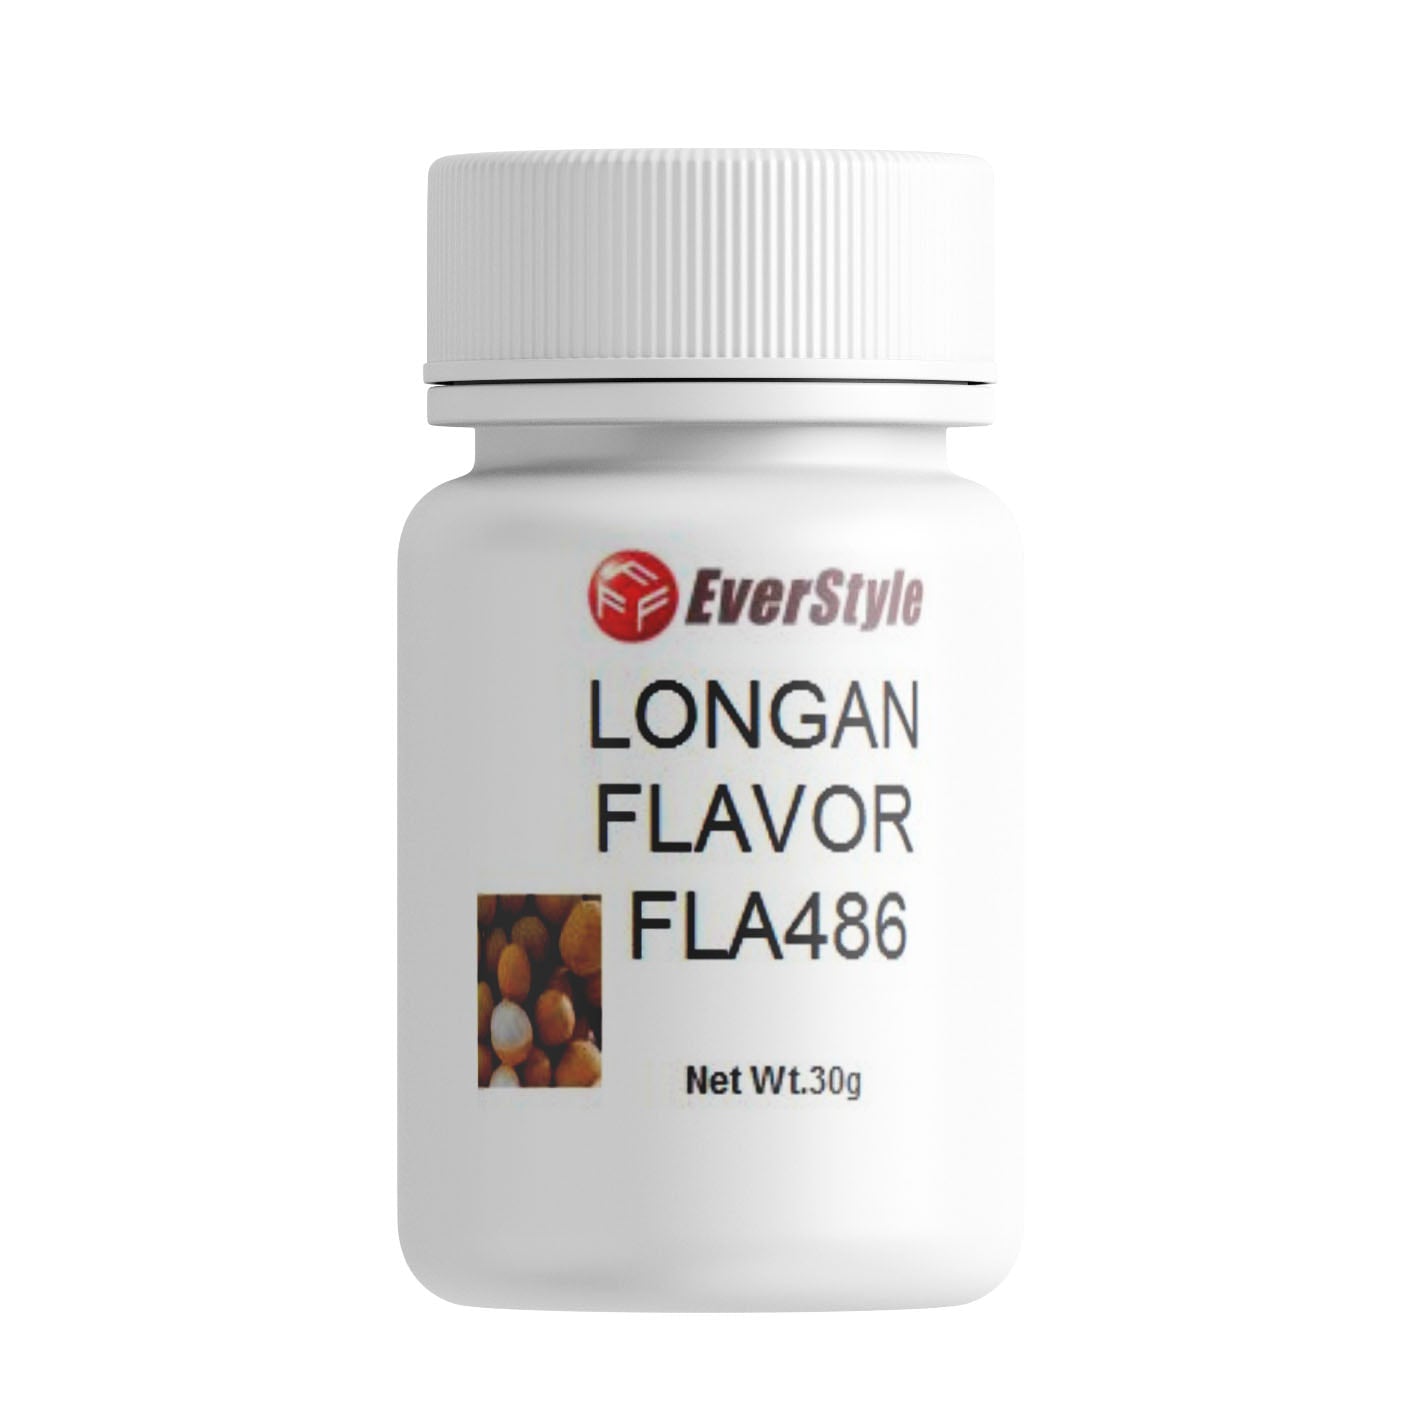 Everstyle Longan Flavor 30g (FLA486)